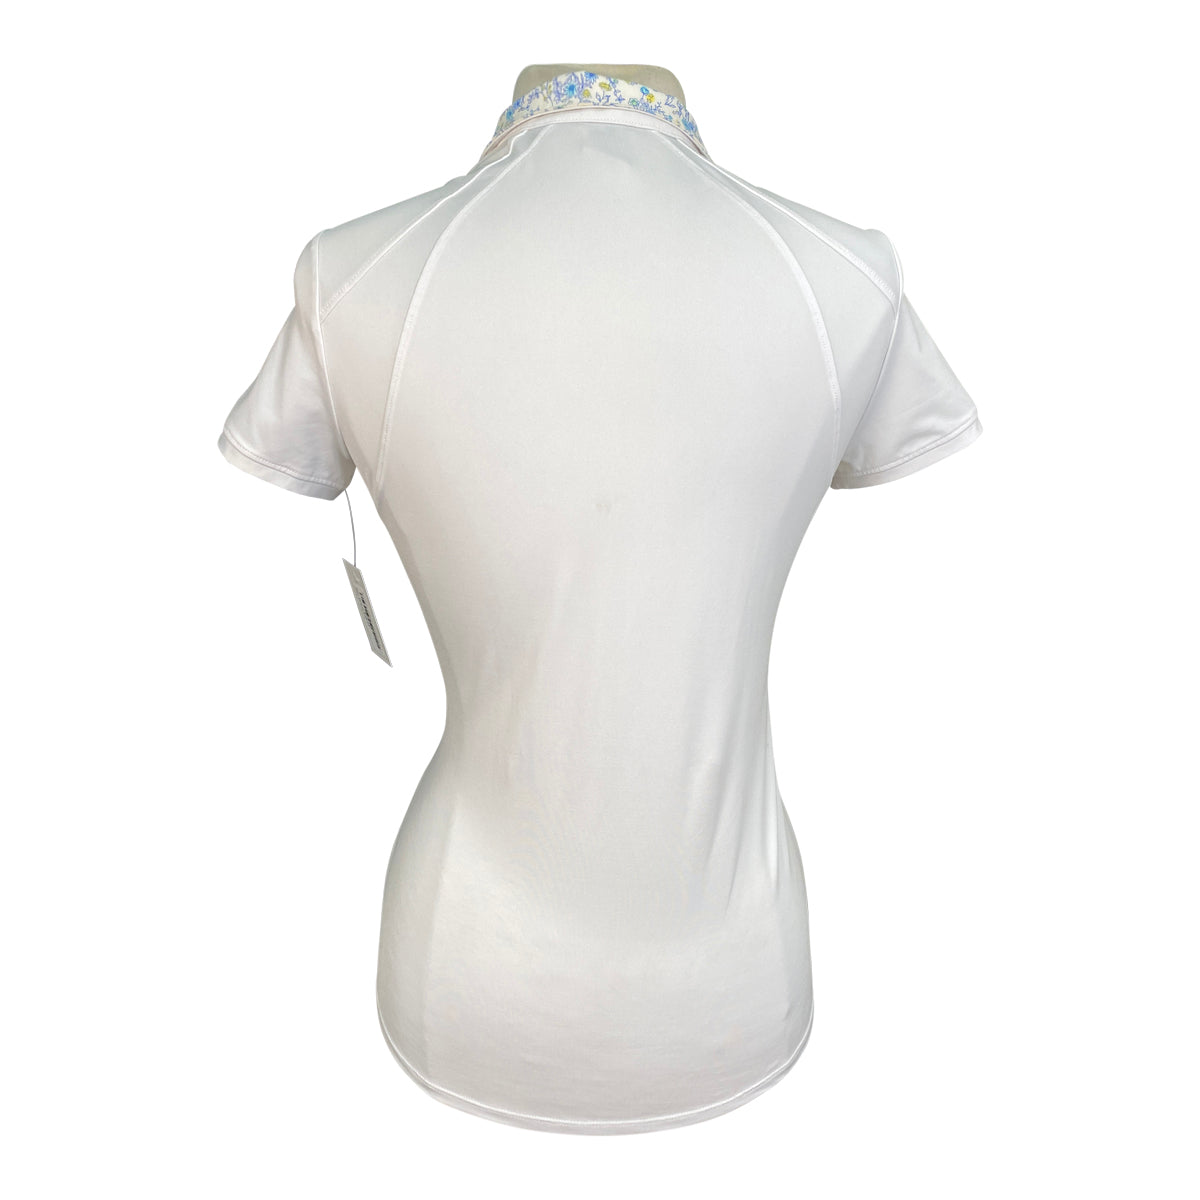 RJ Classics 'Sadie 37.5' Ladies Show Shirt in White w/Floral Pattern